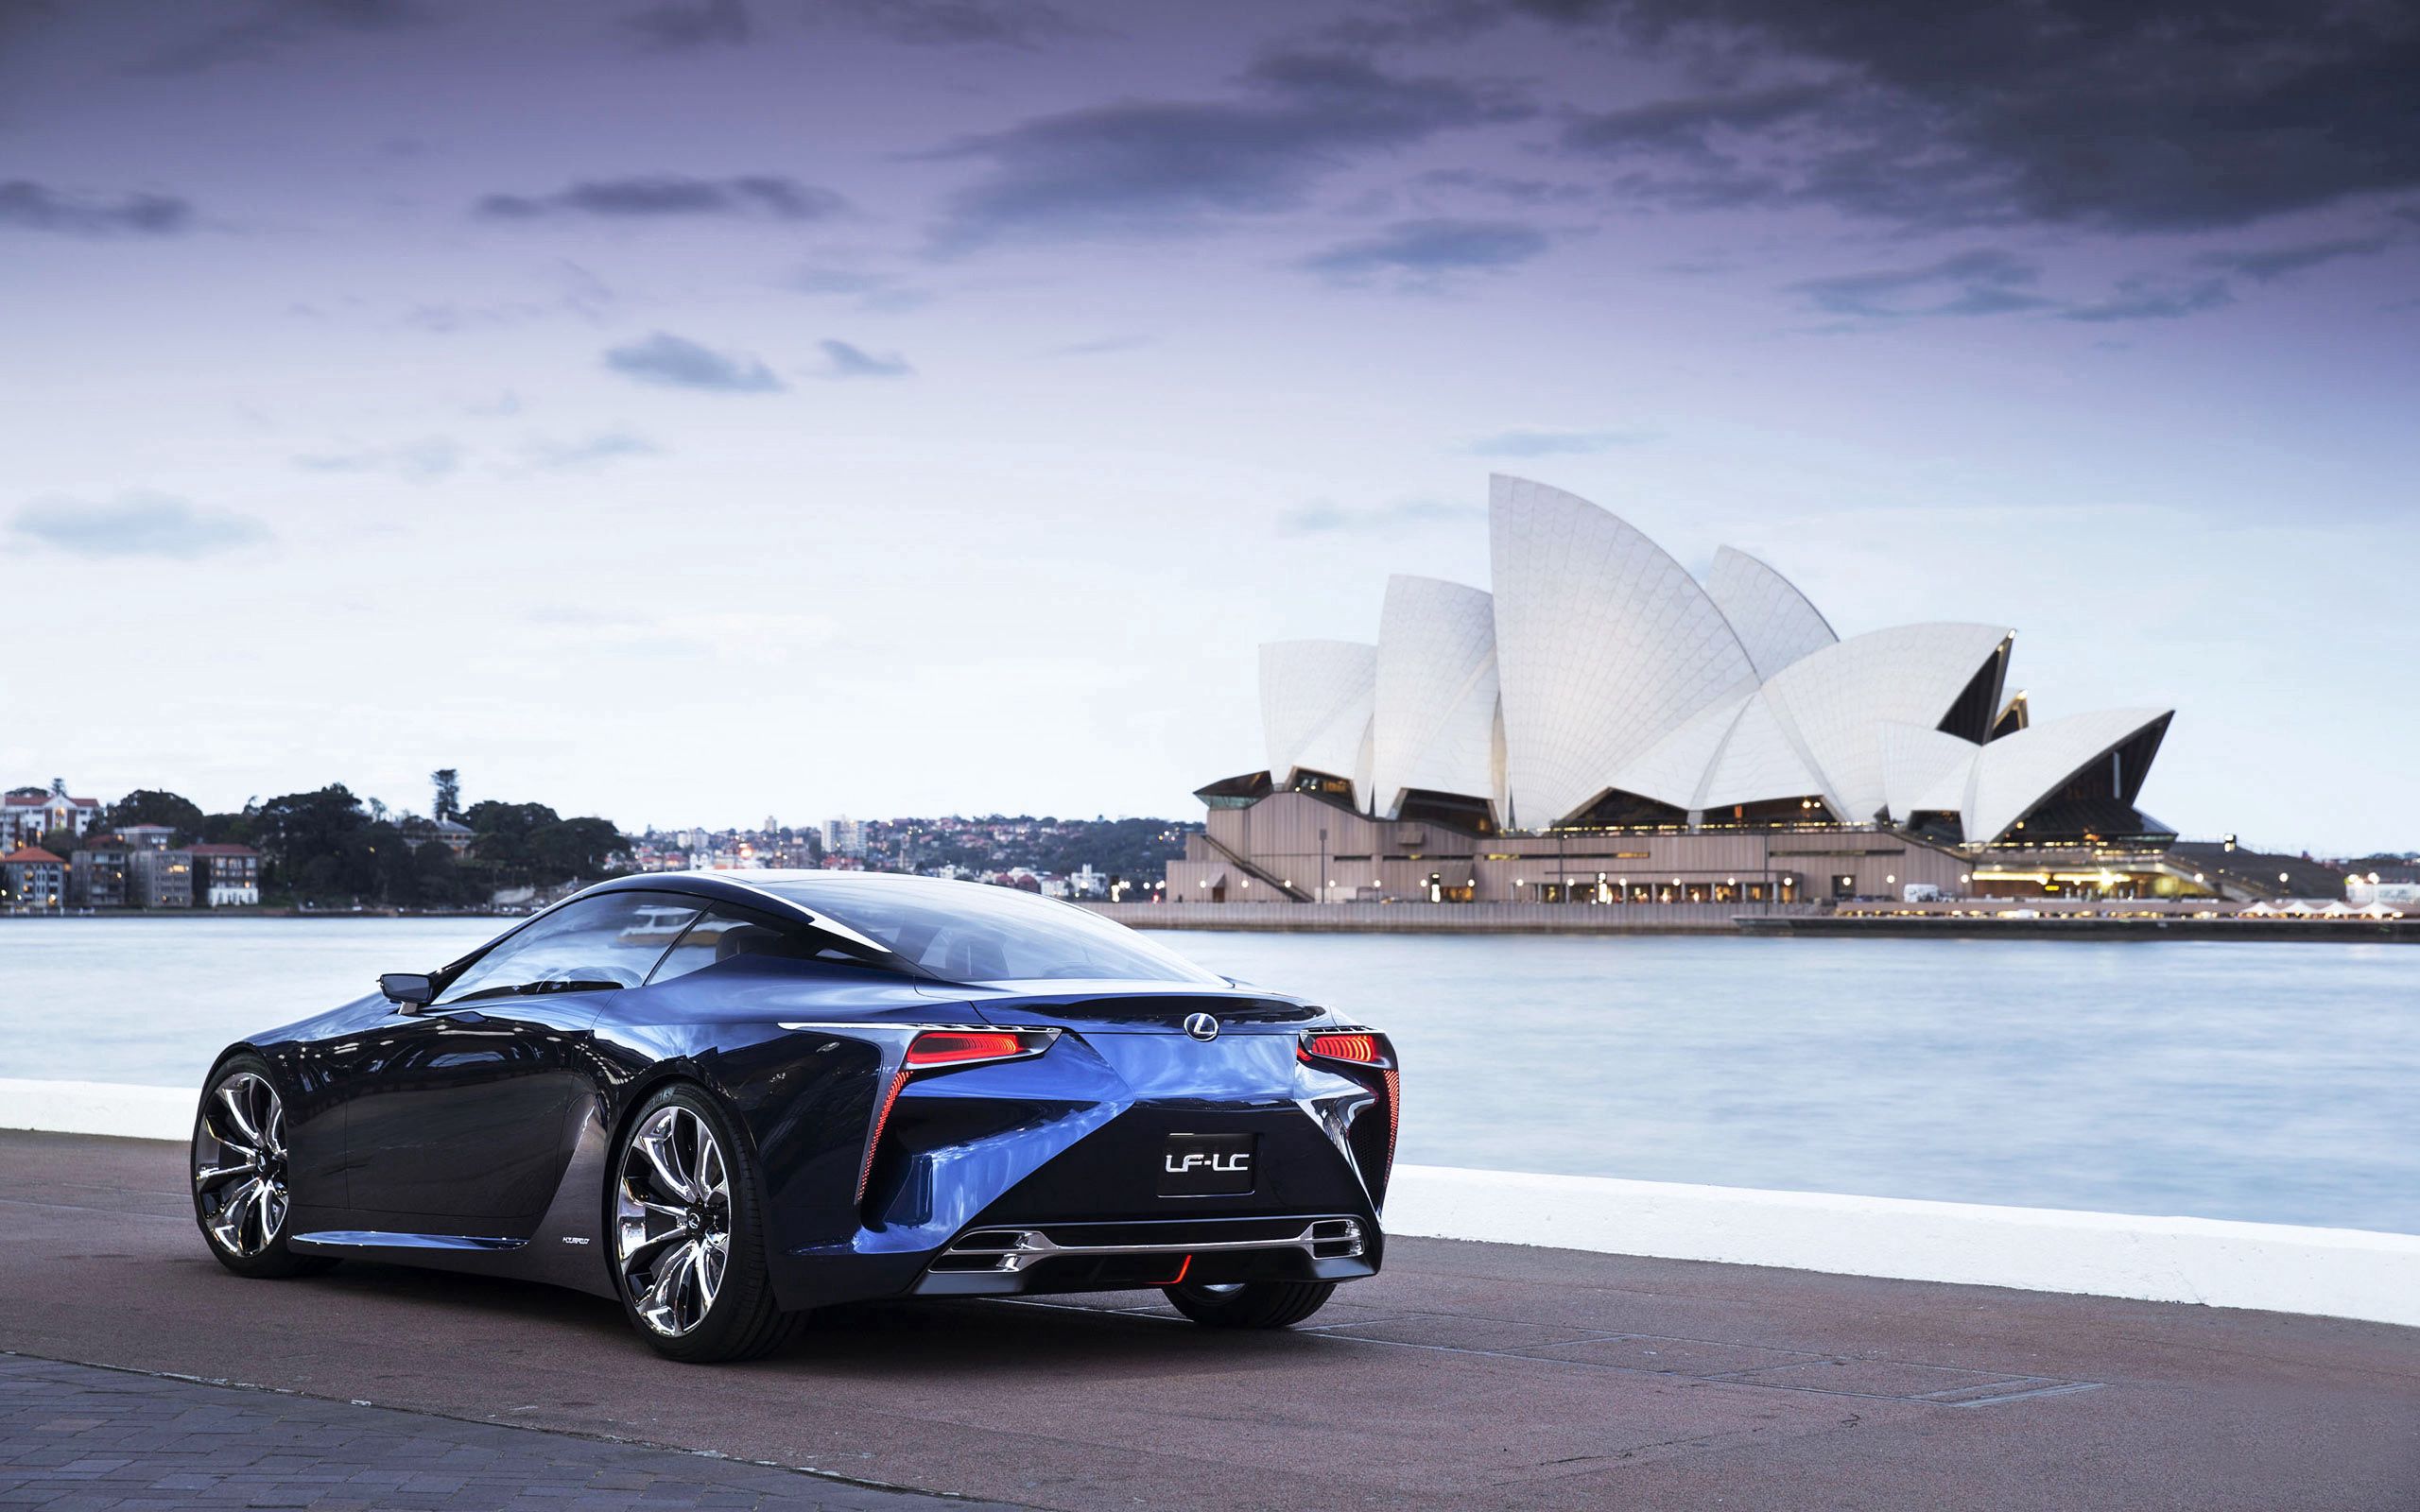 lexus, cars, australia, sydney, opera, lexus lf lc, n s w, new south wales lock screen backgrounds